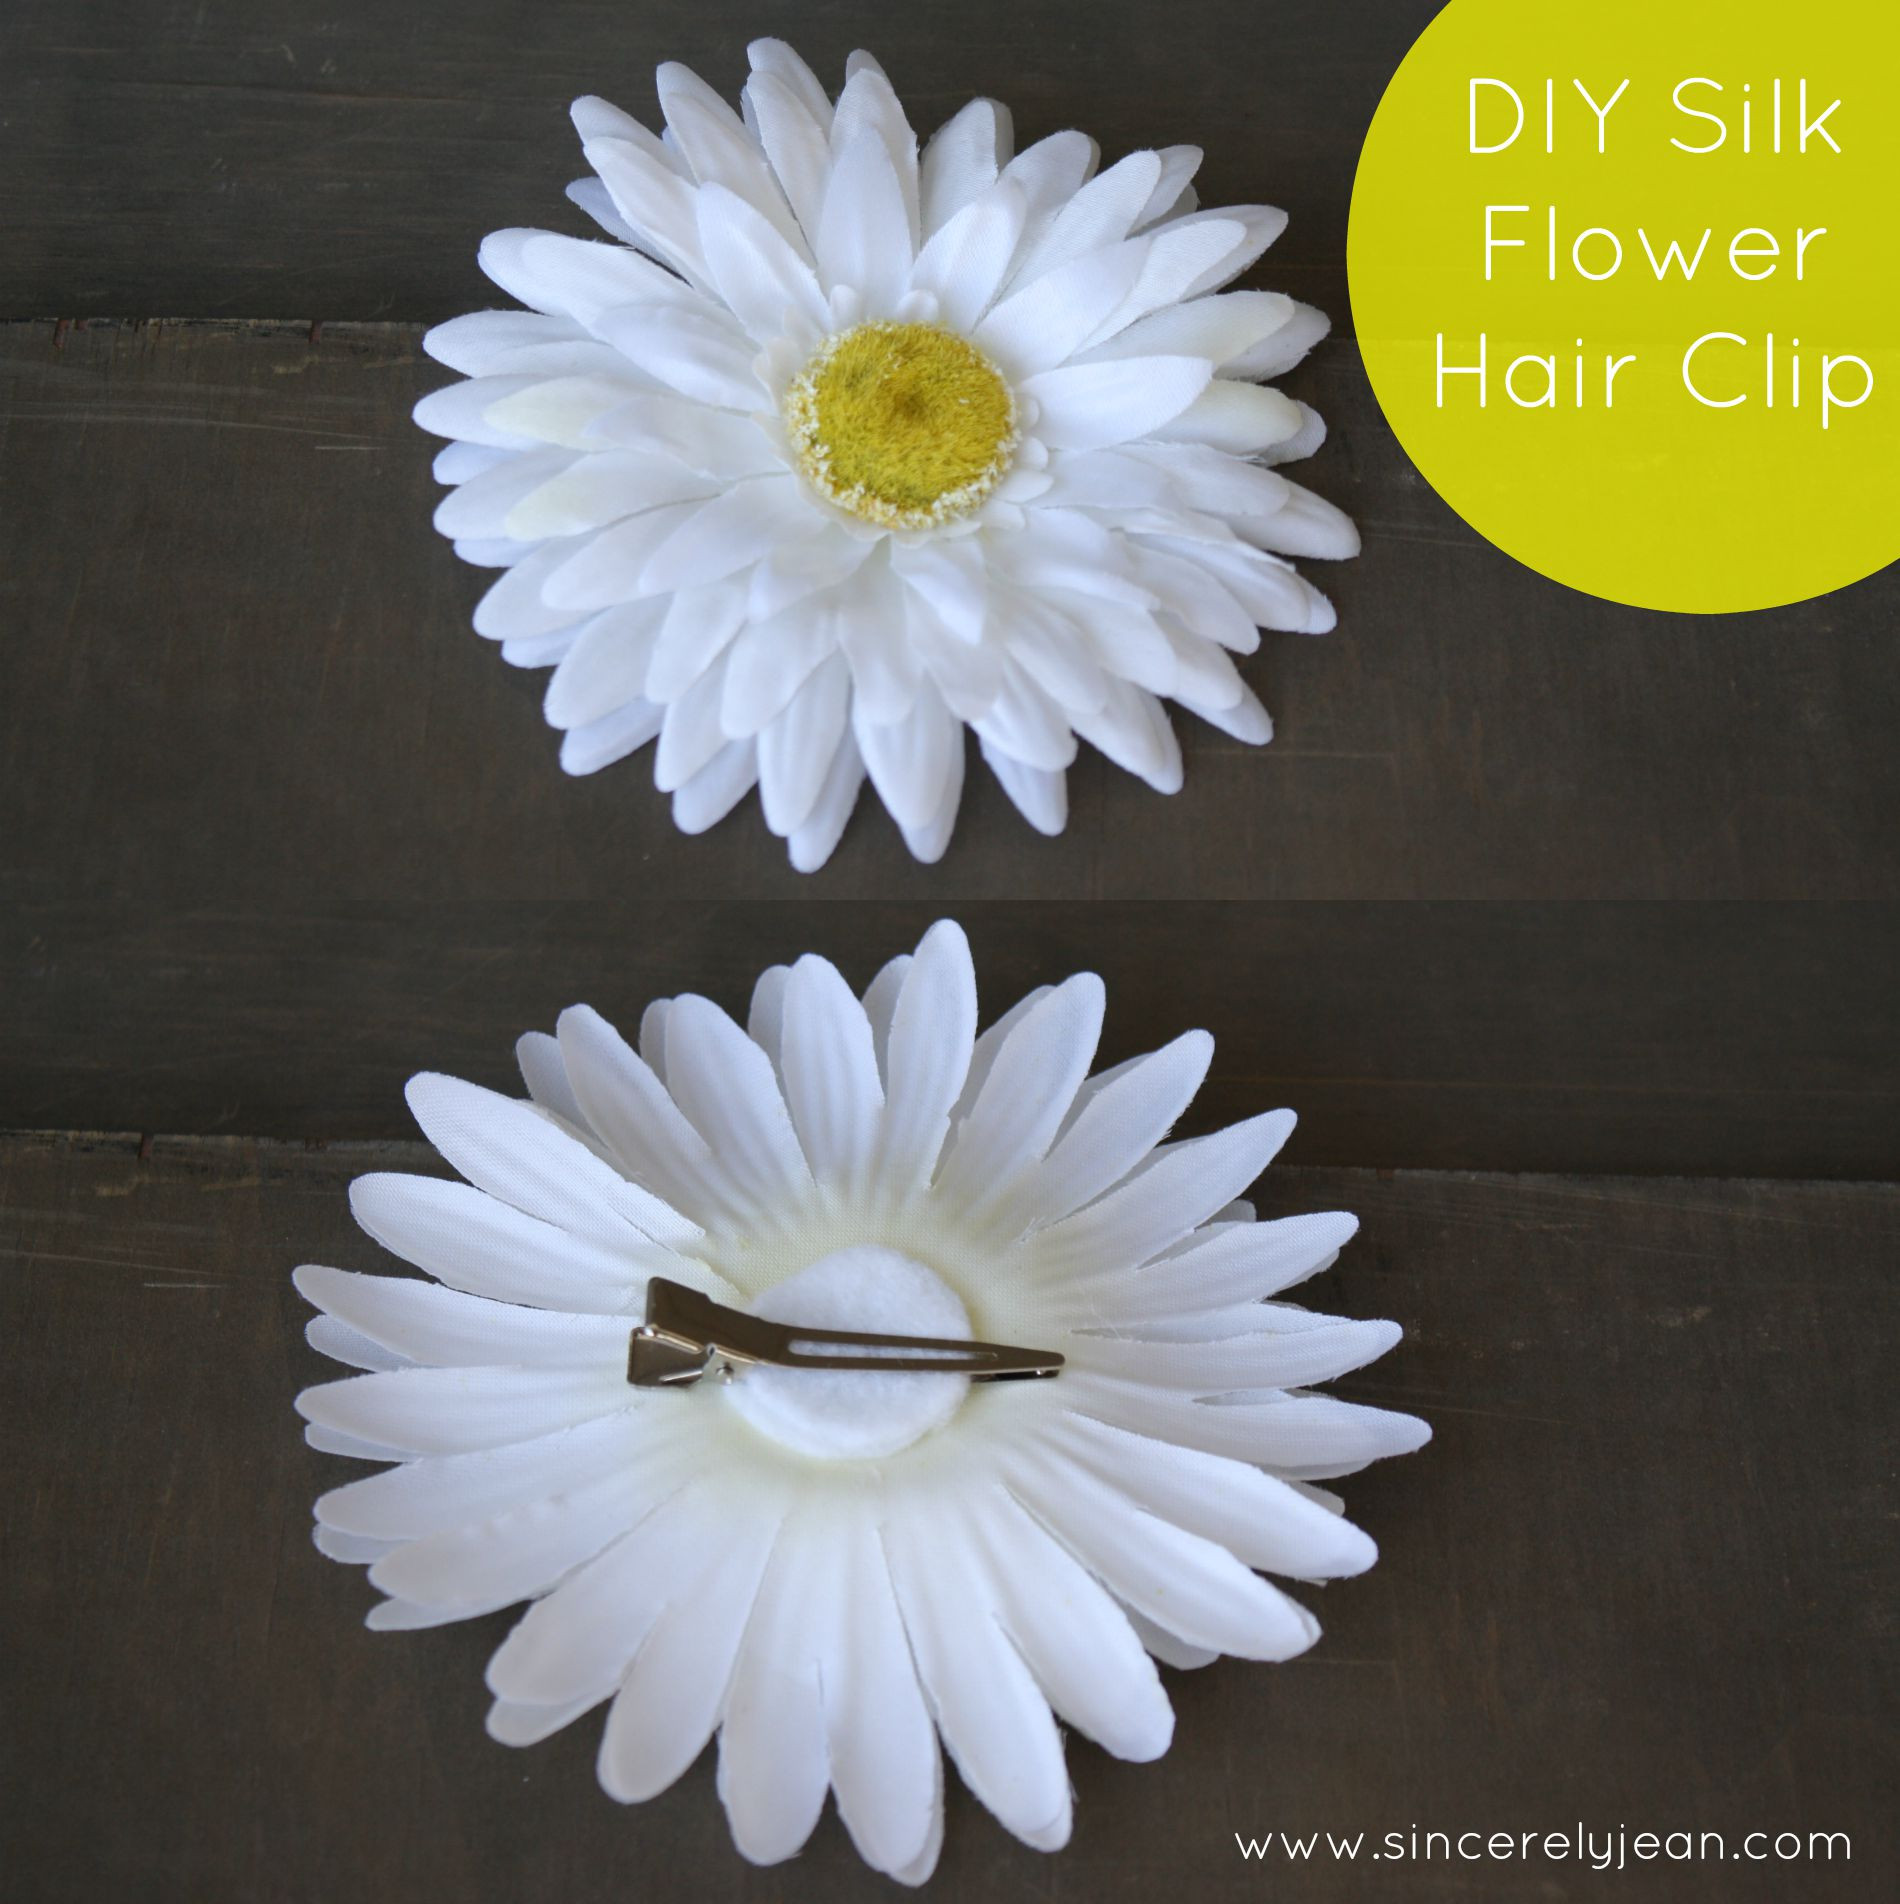 DIY Flower Hair Clip
 DIY Silk Flower Hair Clip Sincerely Jean